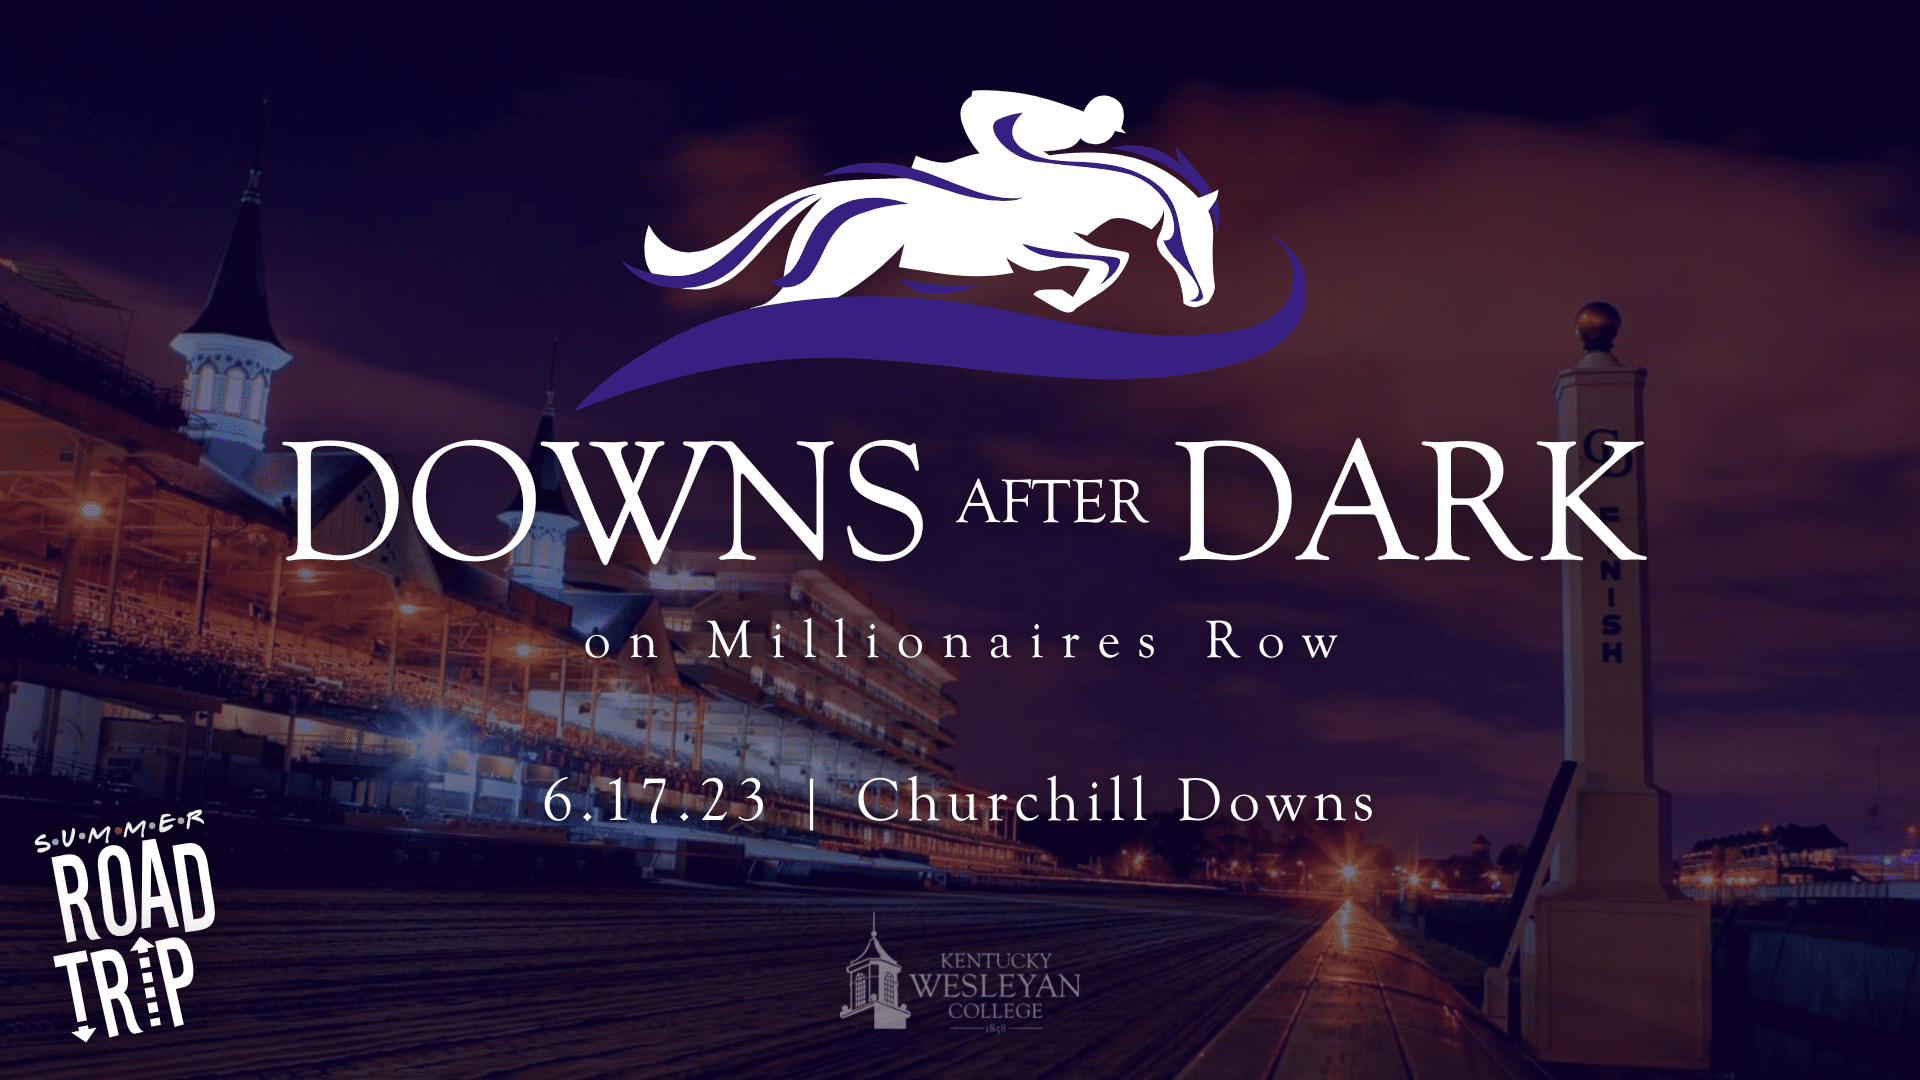 Downs After Dark on Millionaires Row Kentucky Wesleyan College